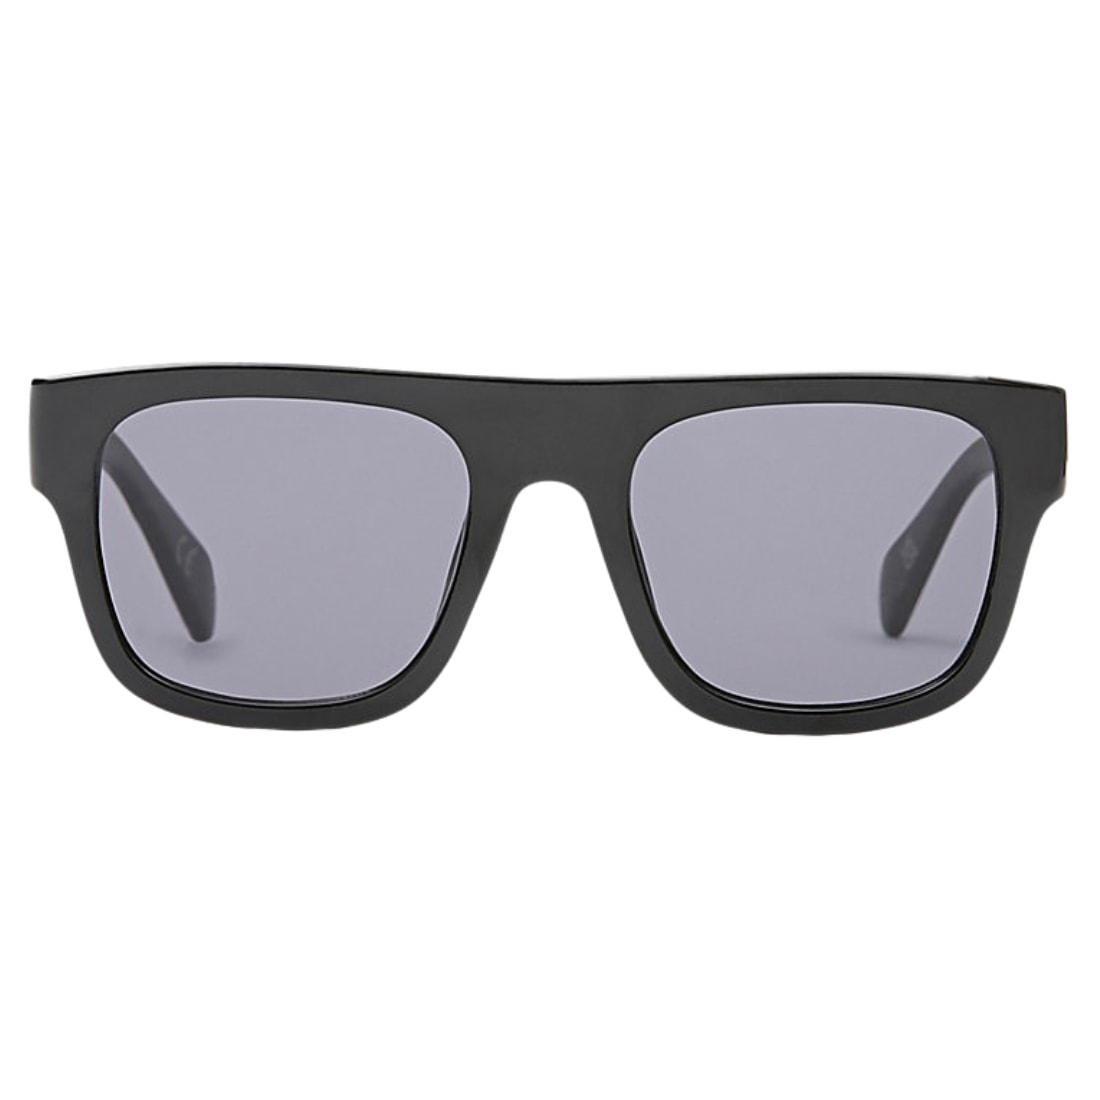 Vans Squared Off Shades Sunglasses - Black - Square/Rectangular Sunglasses by Vans